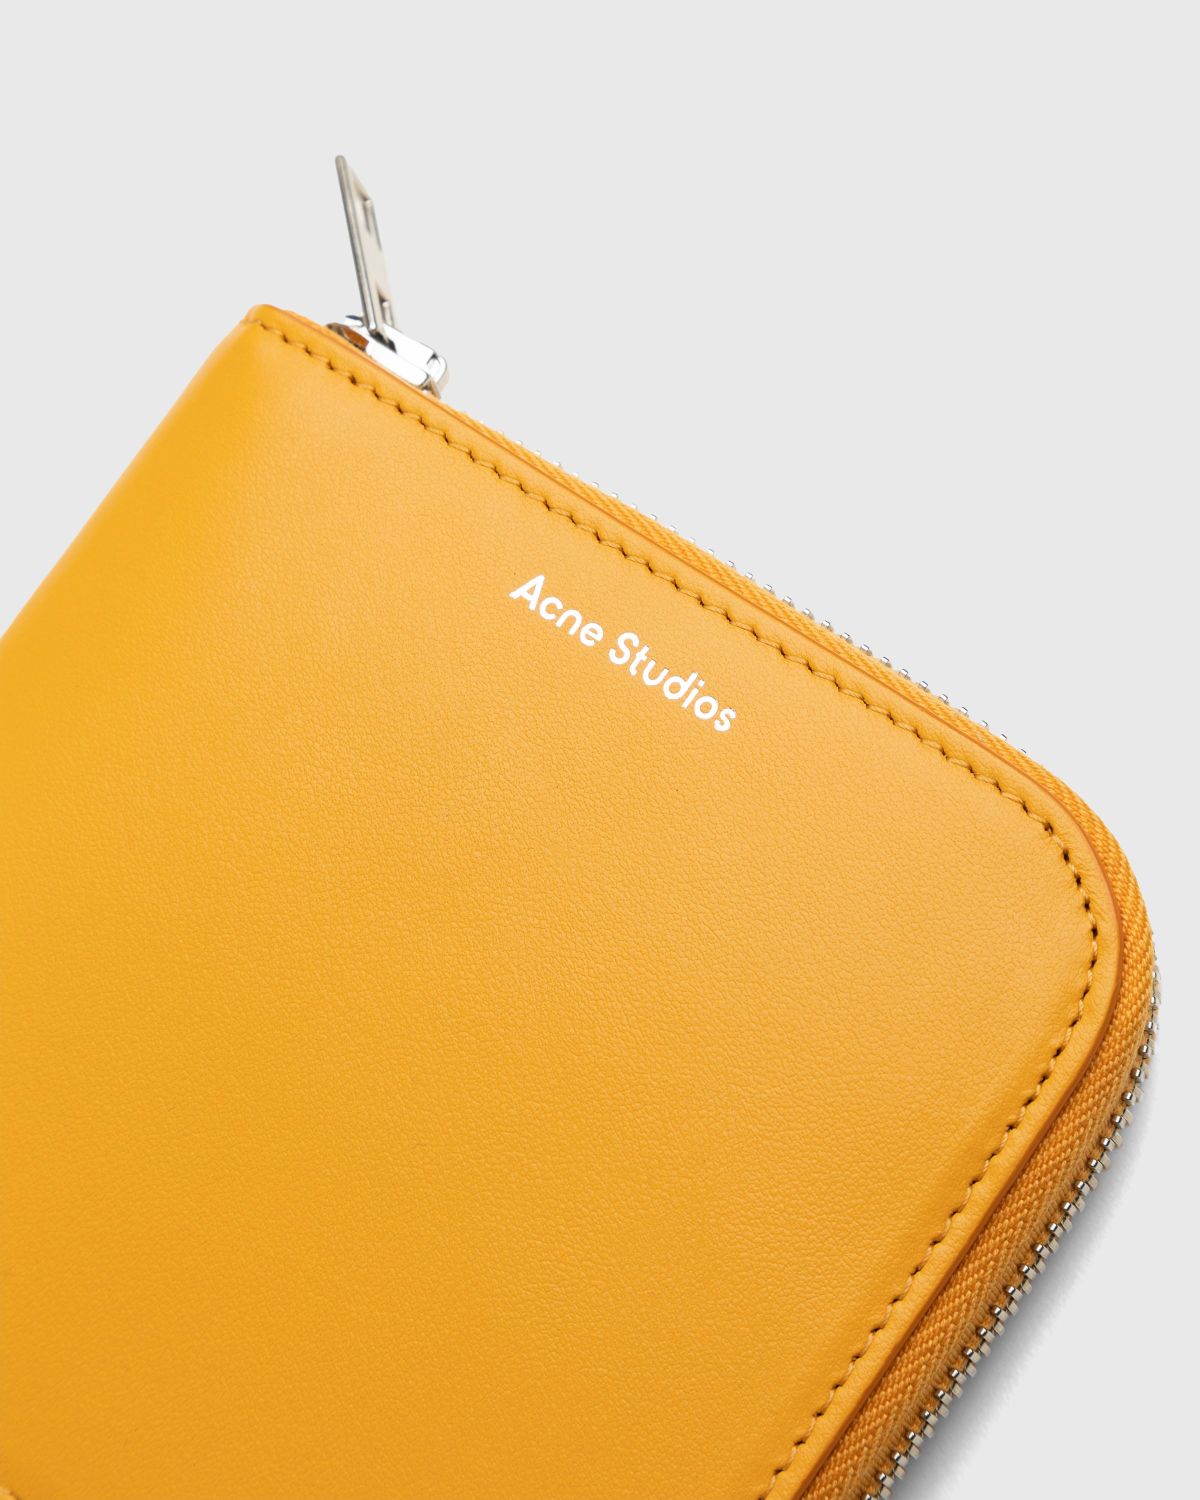 Acne Studios – Leather Zip Wallet Orange - Wallets - Orange - Image 3